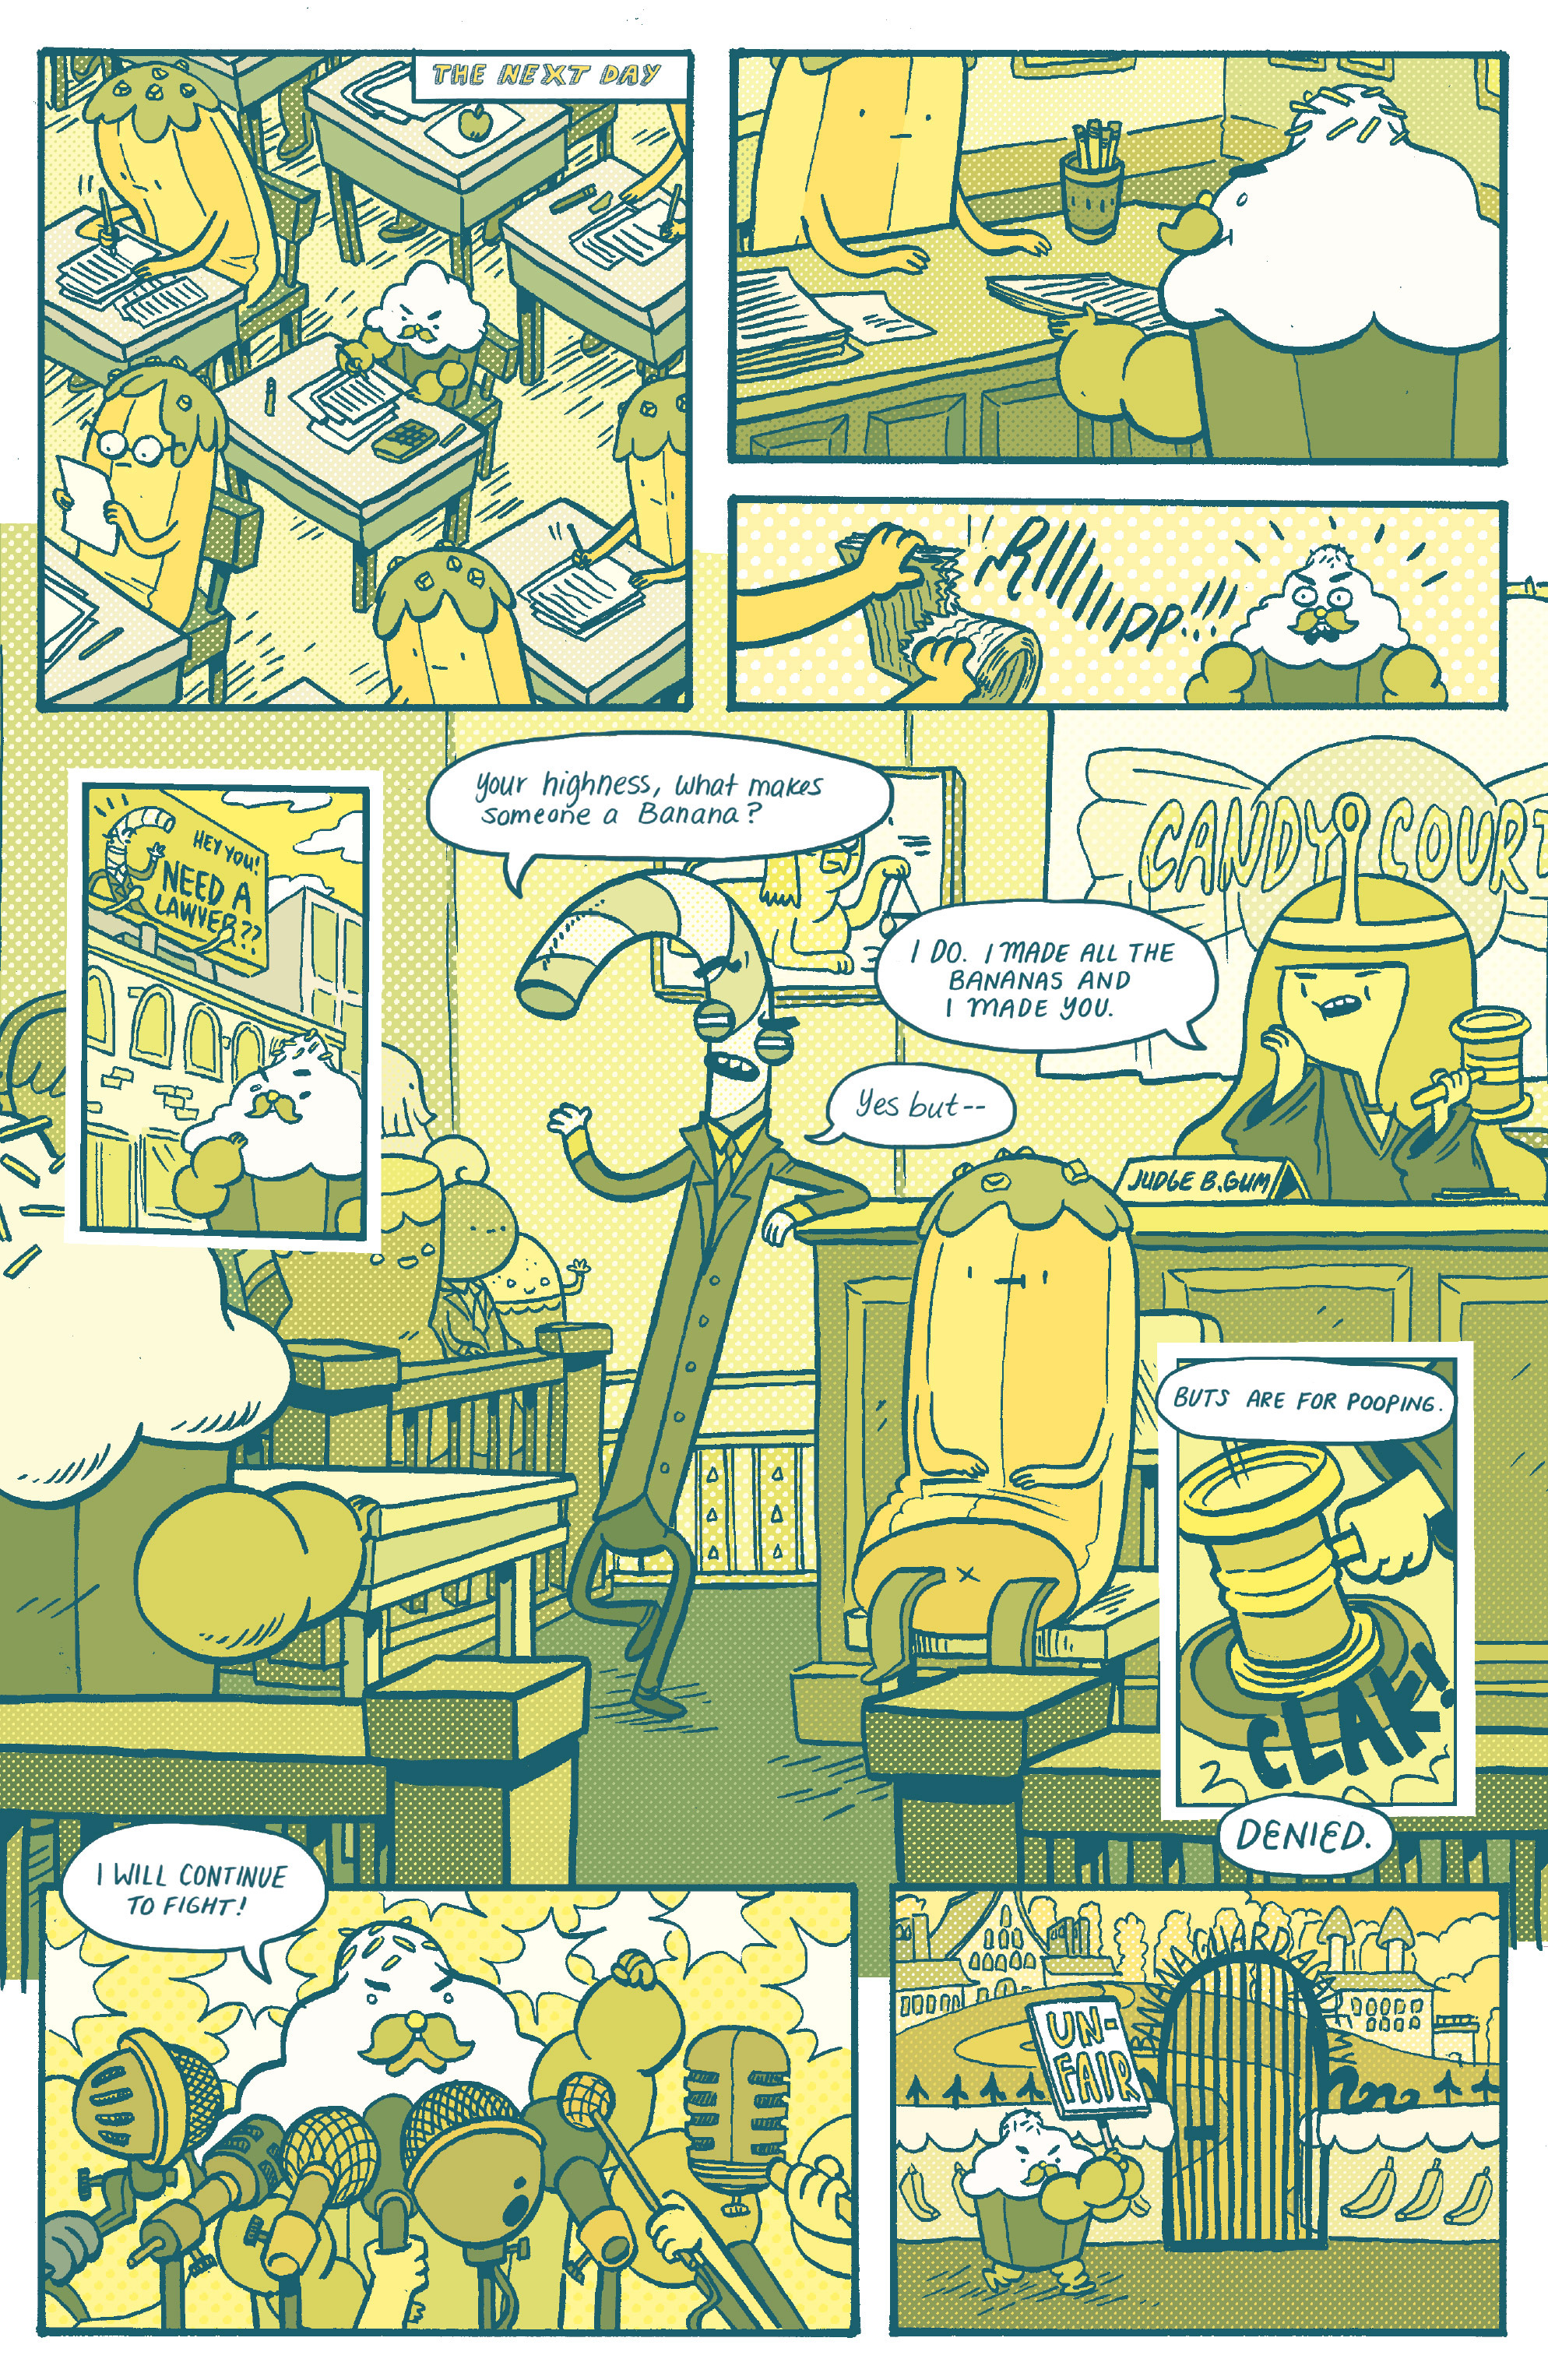 Read online Adventure Time: Banana Guard Academ comic -  Issue #1 - 13